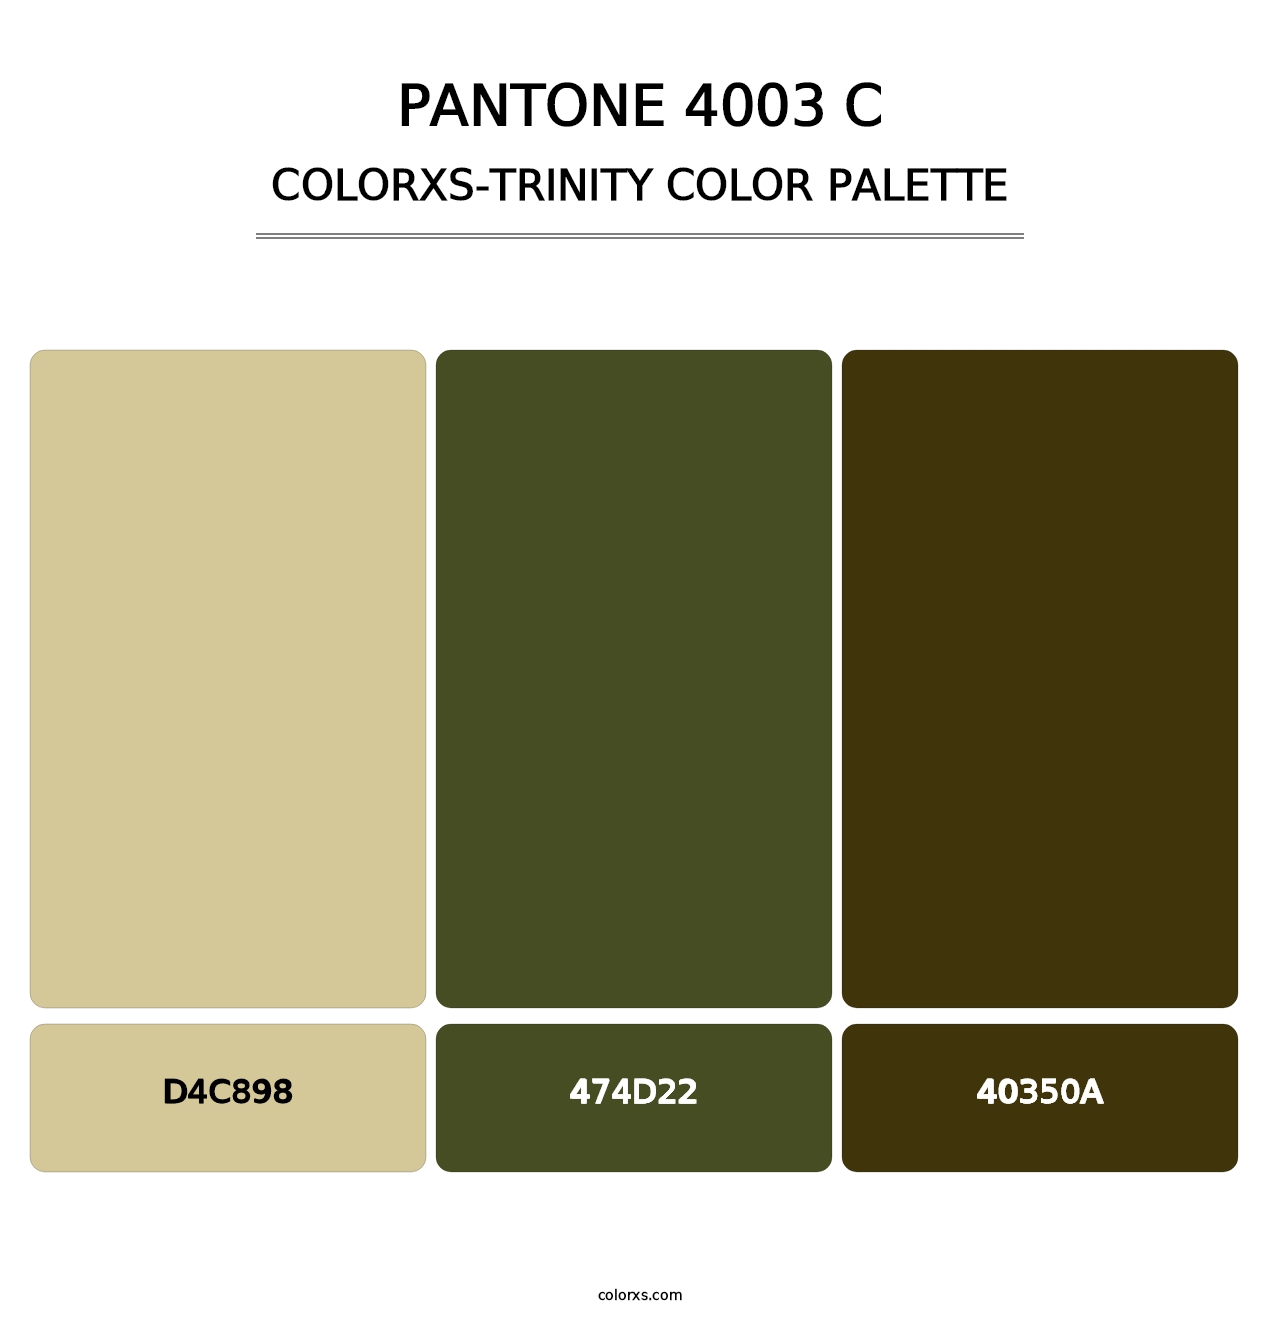 PANTONE 4003 C - Colorxs Trinity Palette